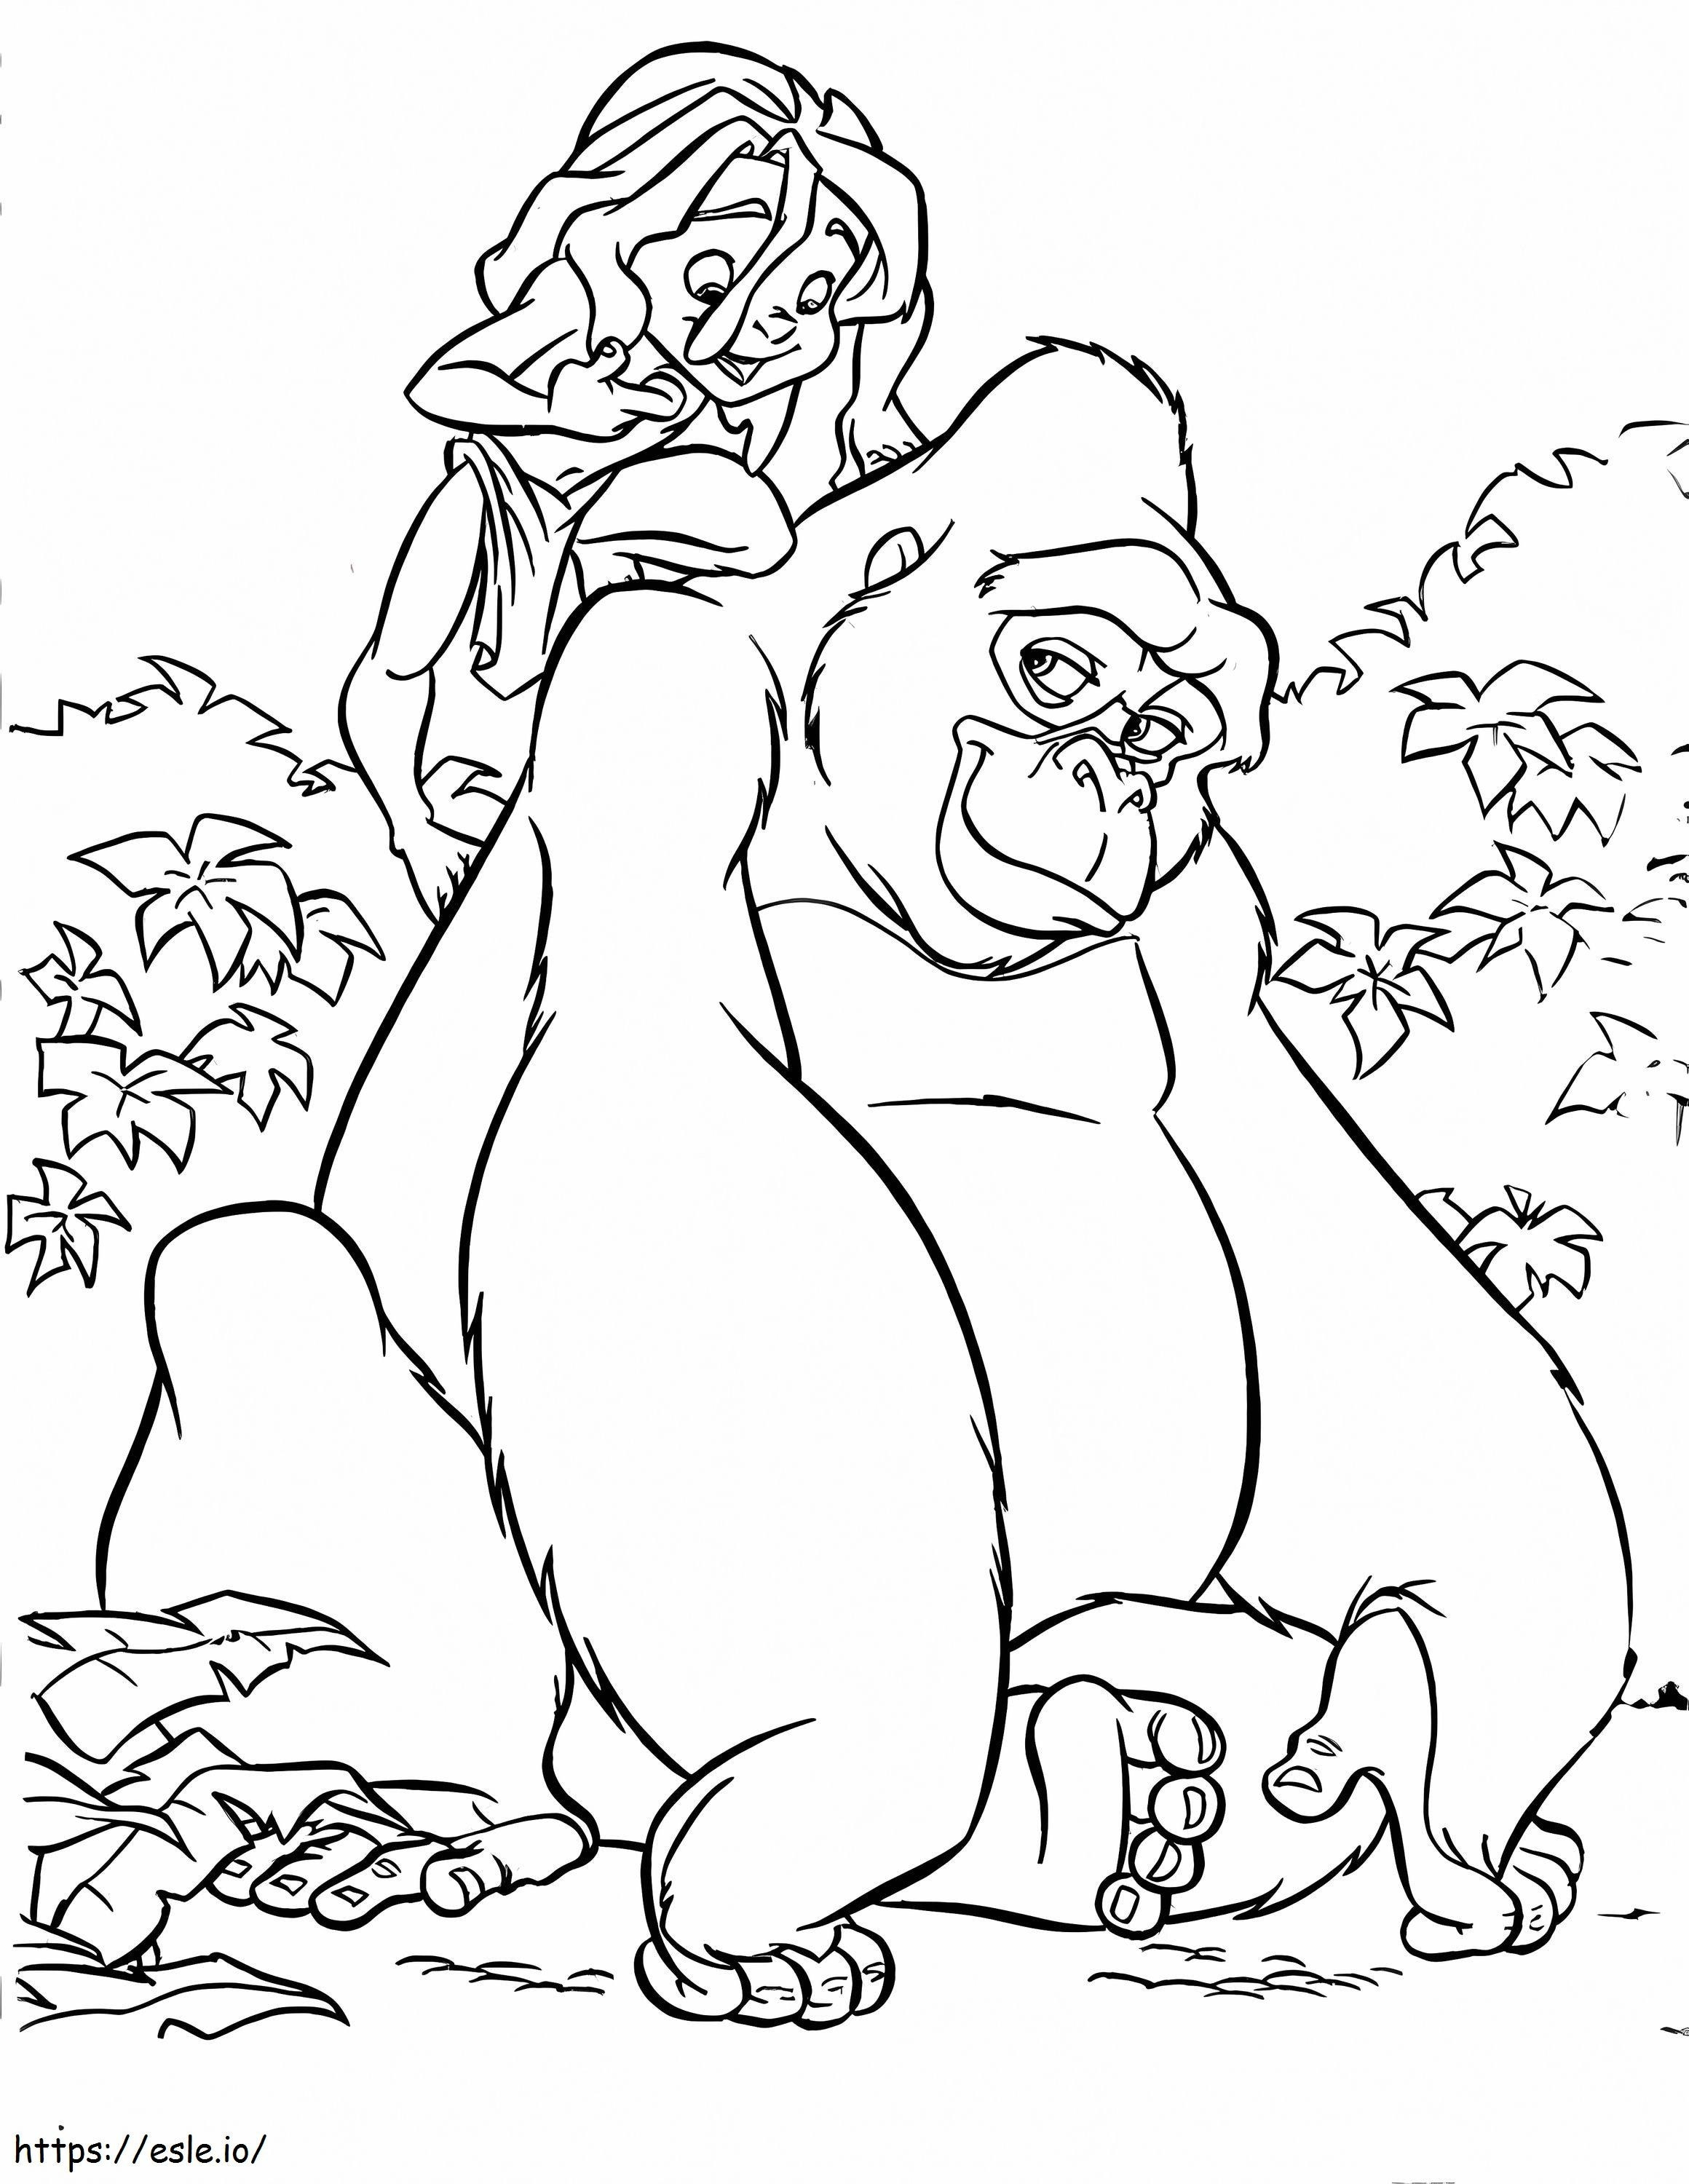 Tarzan mit King Kong ausmalbilder